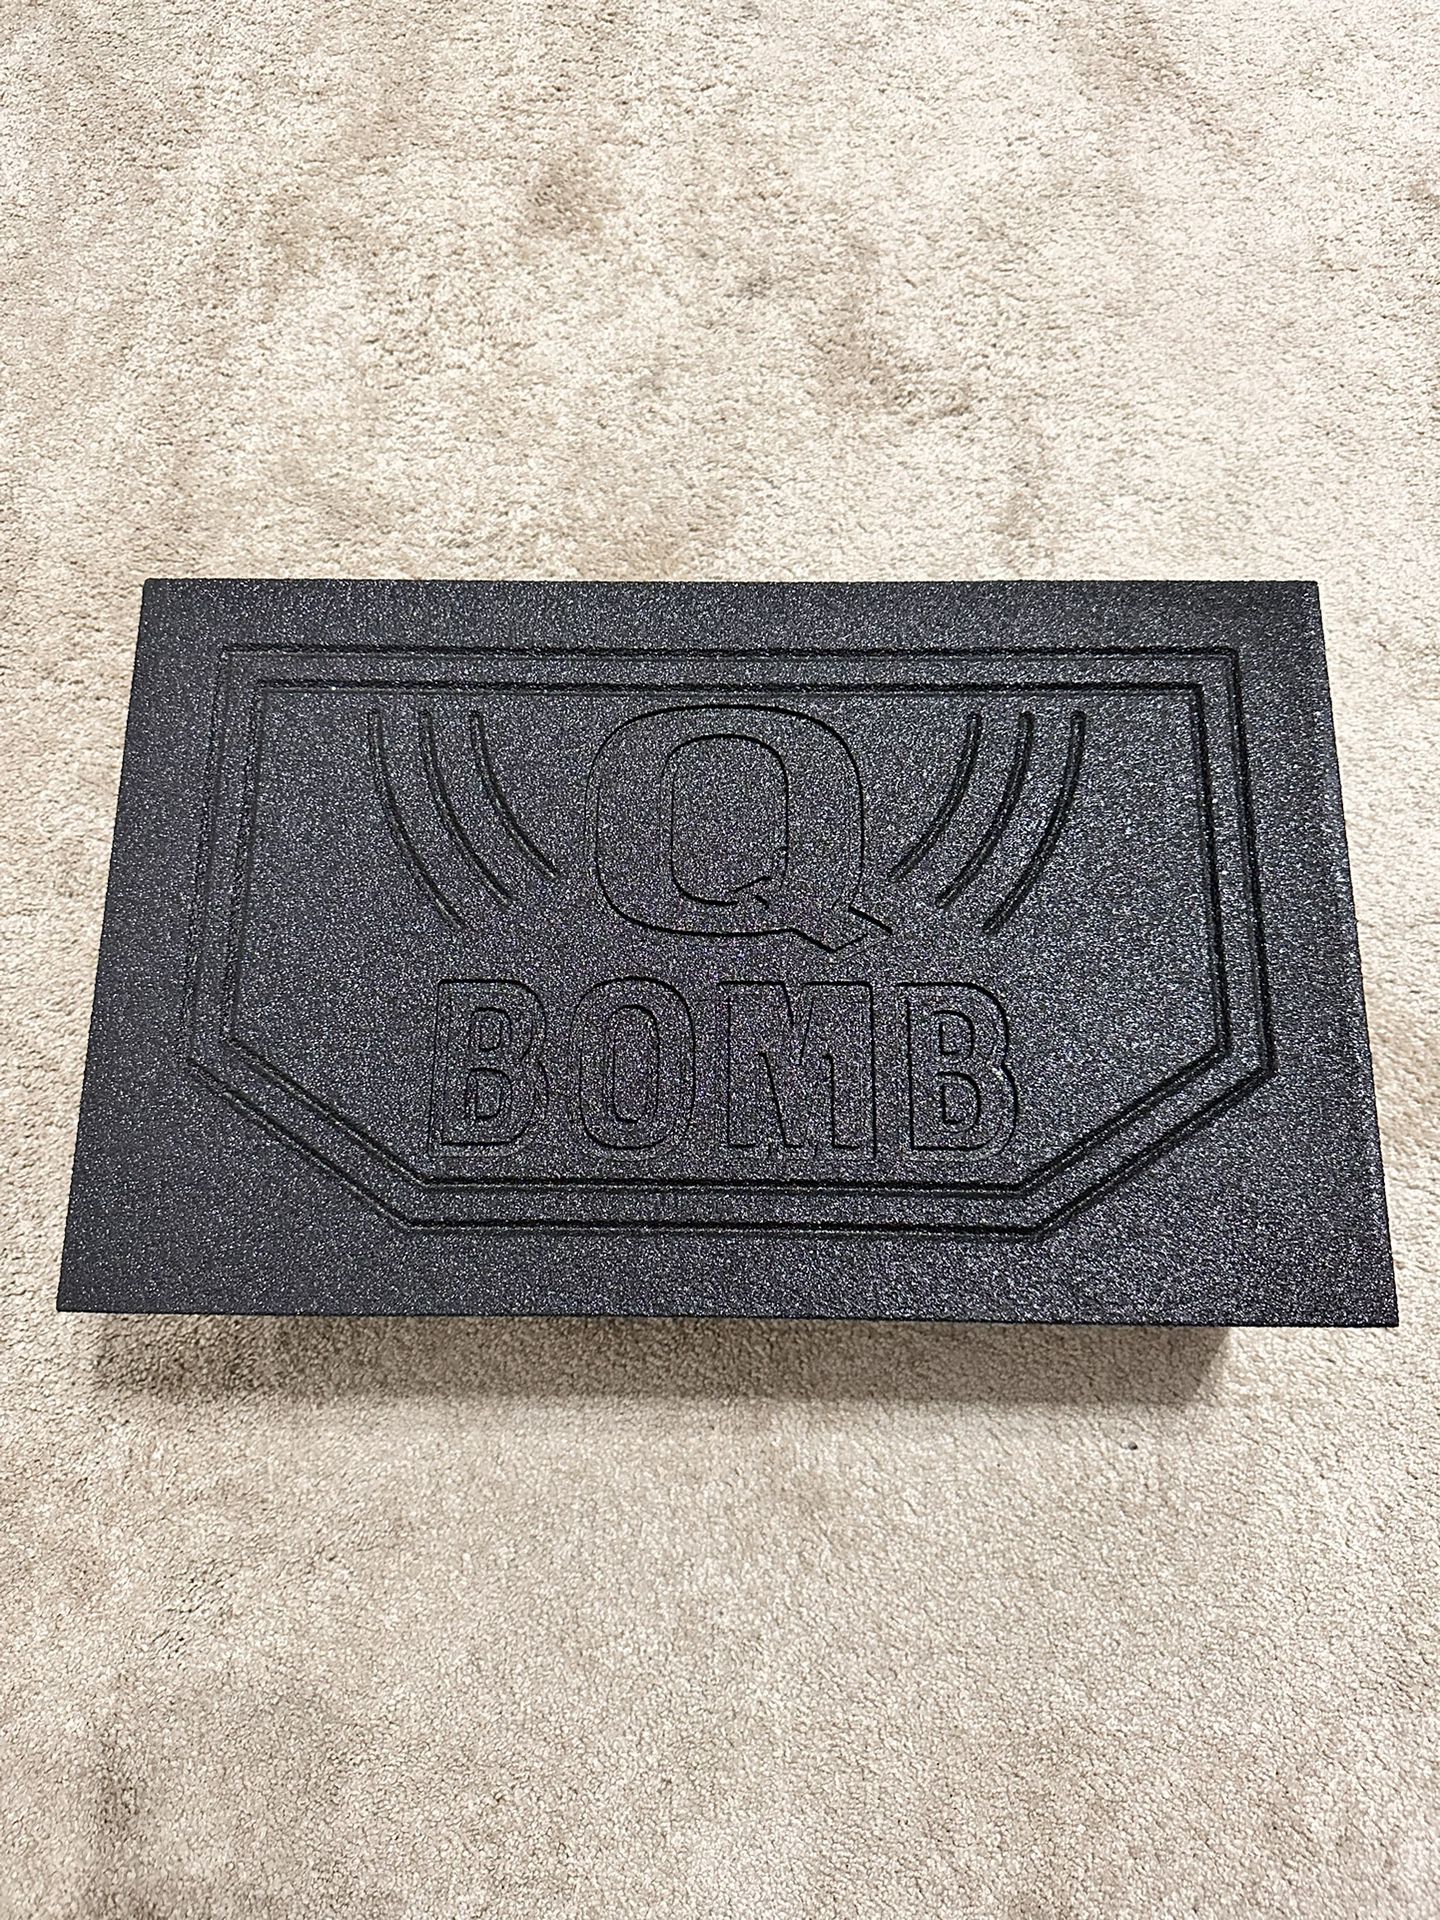 10” Q-Bomb Shallow Mount Sub box 